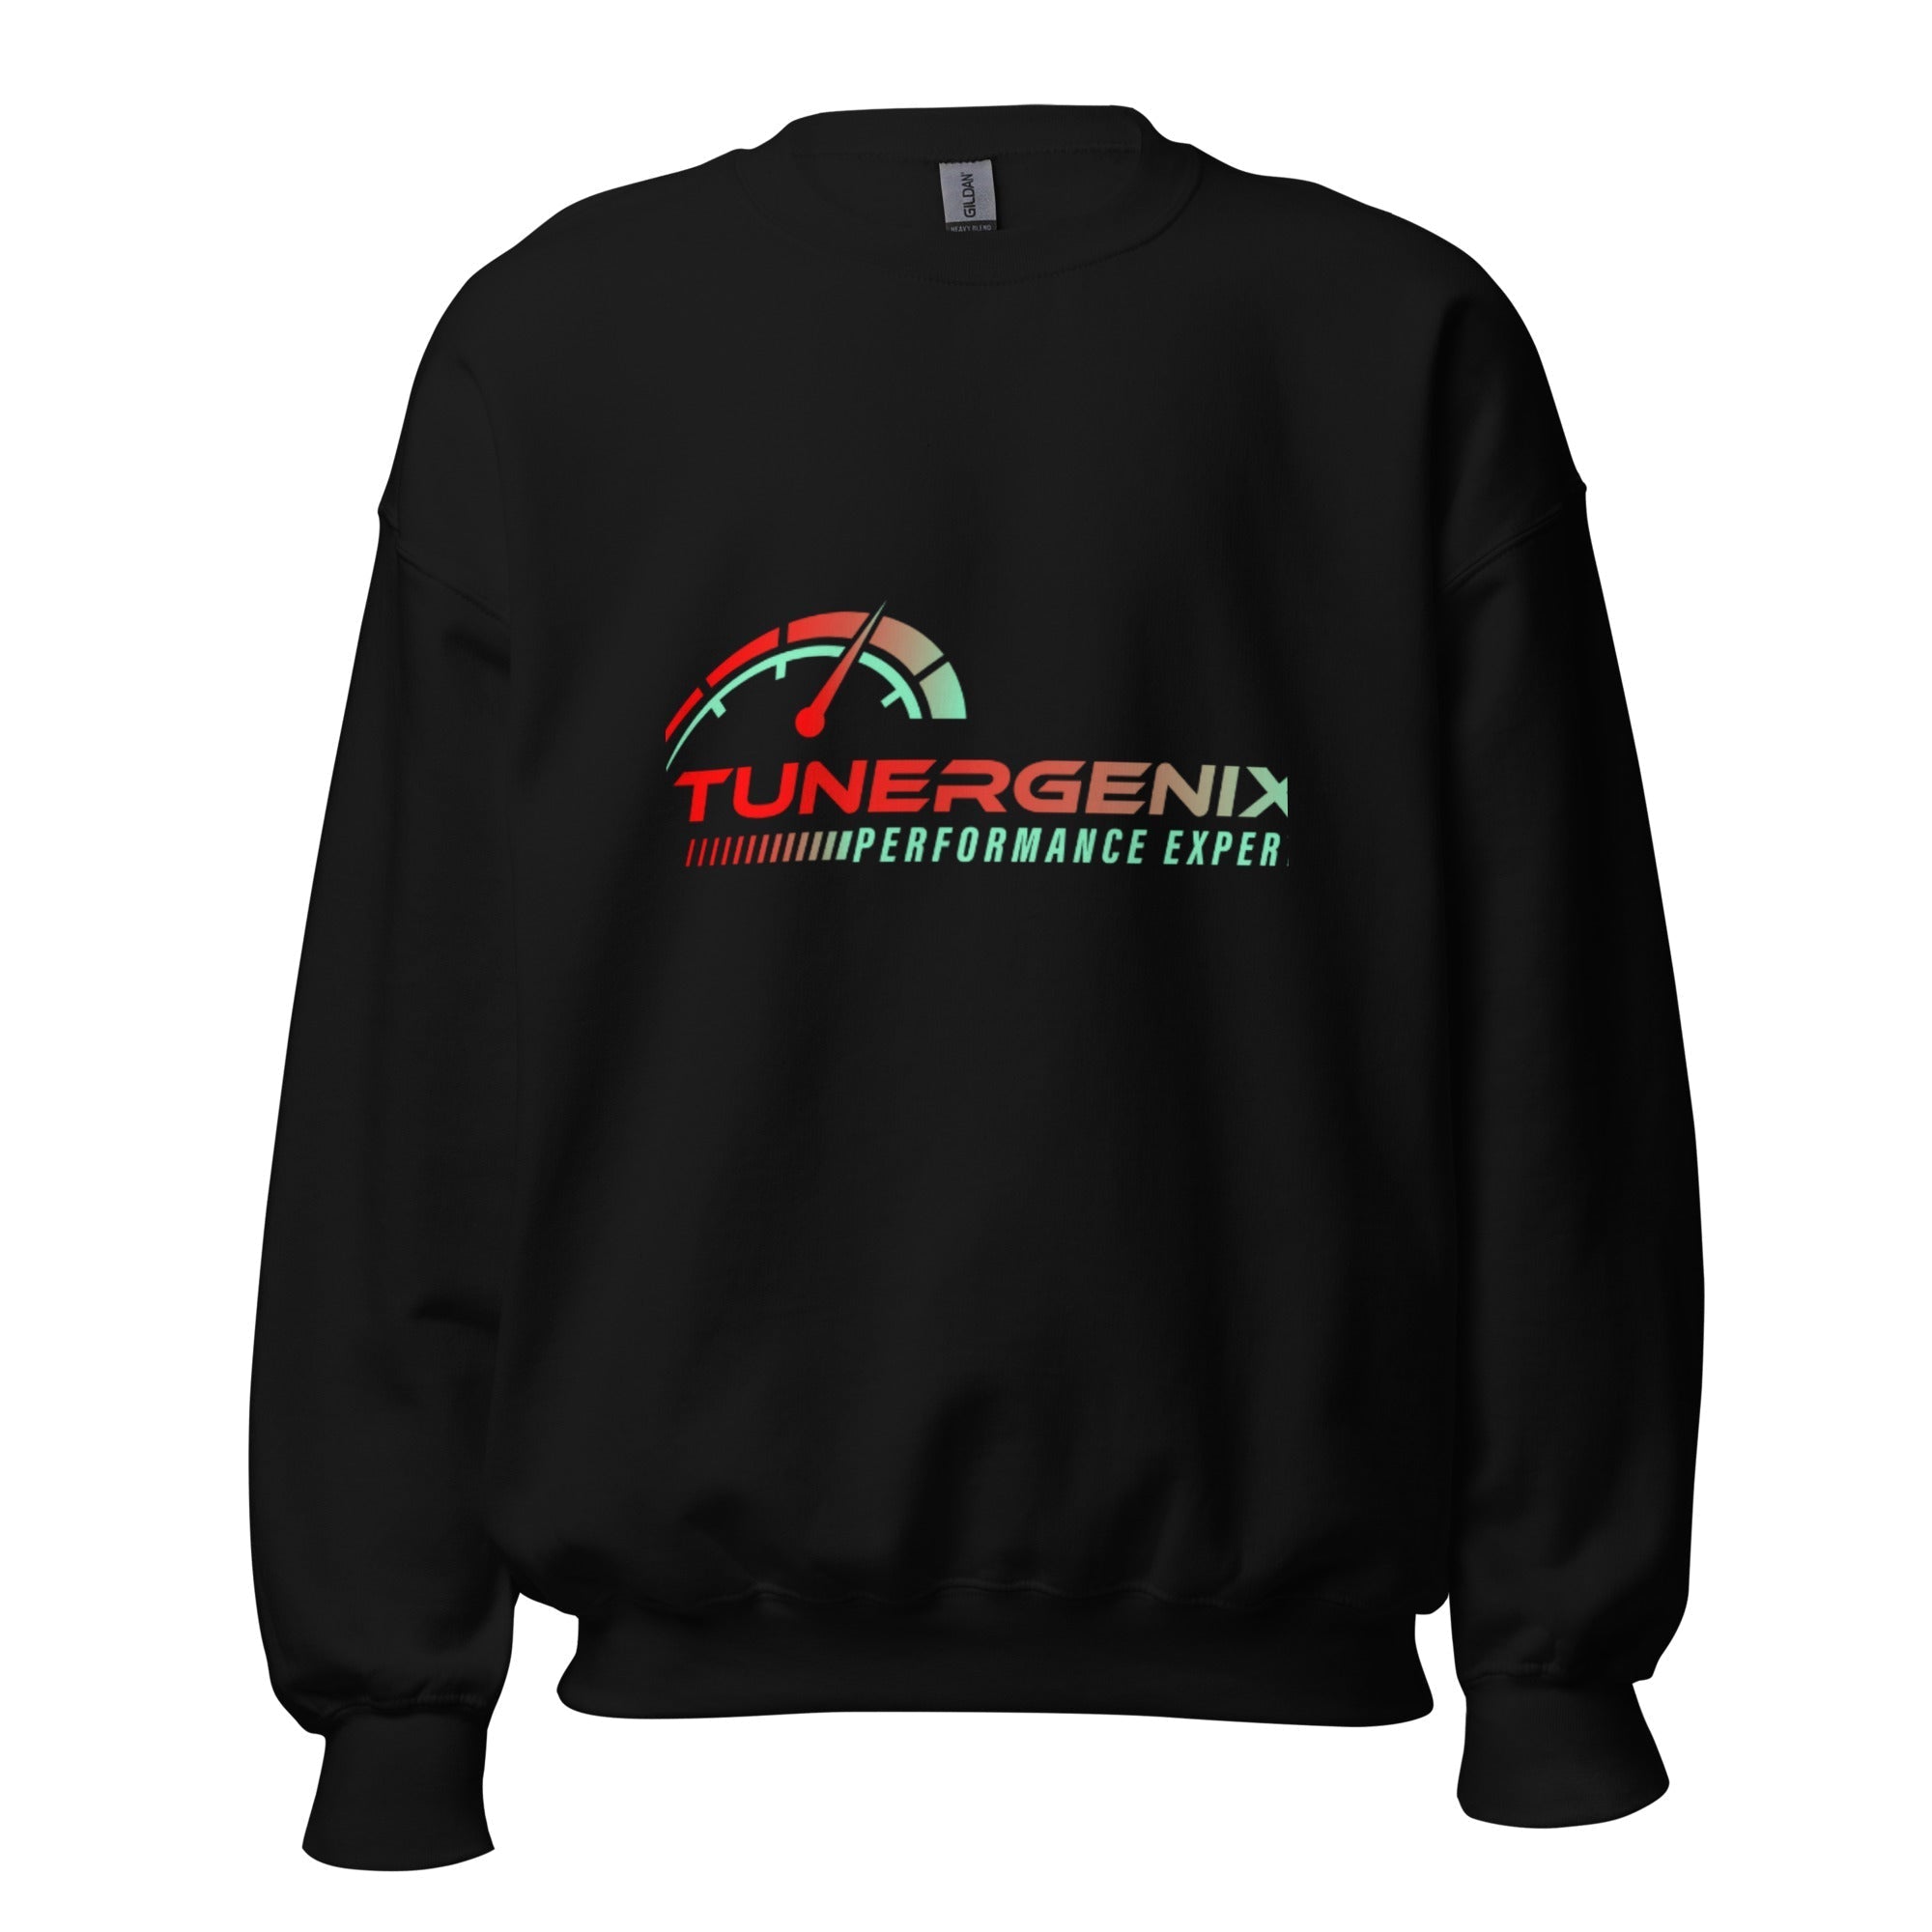 Misc S TunerGenix Black Unisex Sweatshirt